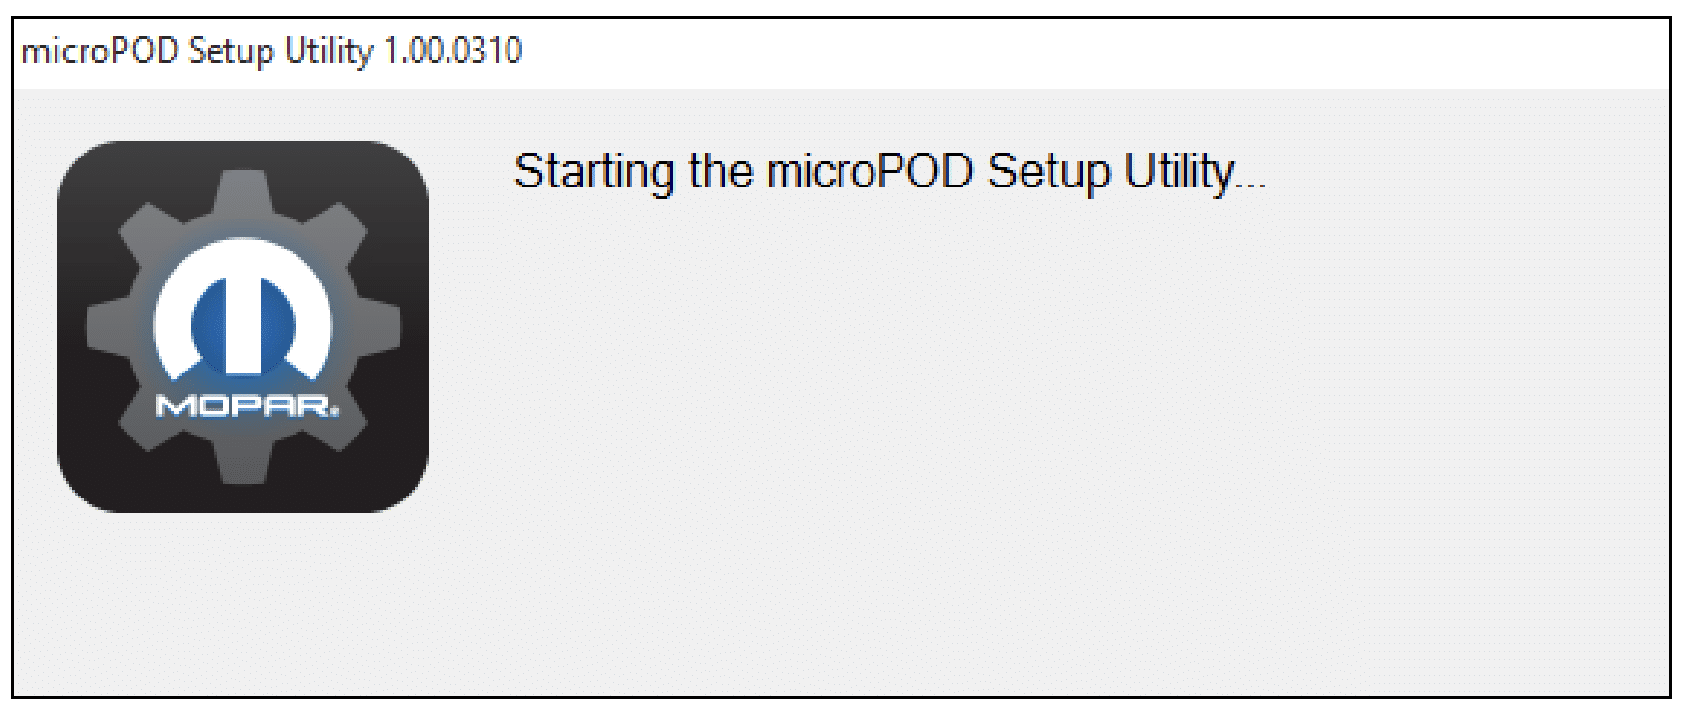 microPOD Setup Utility 